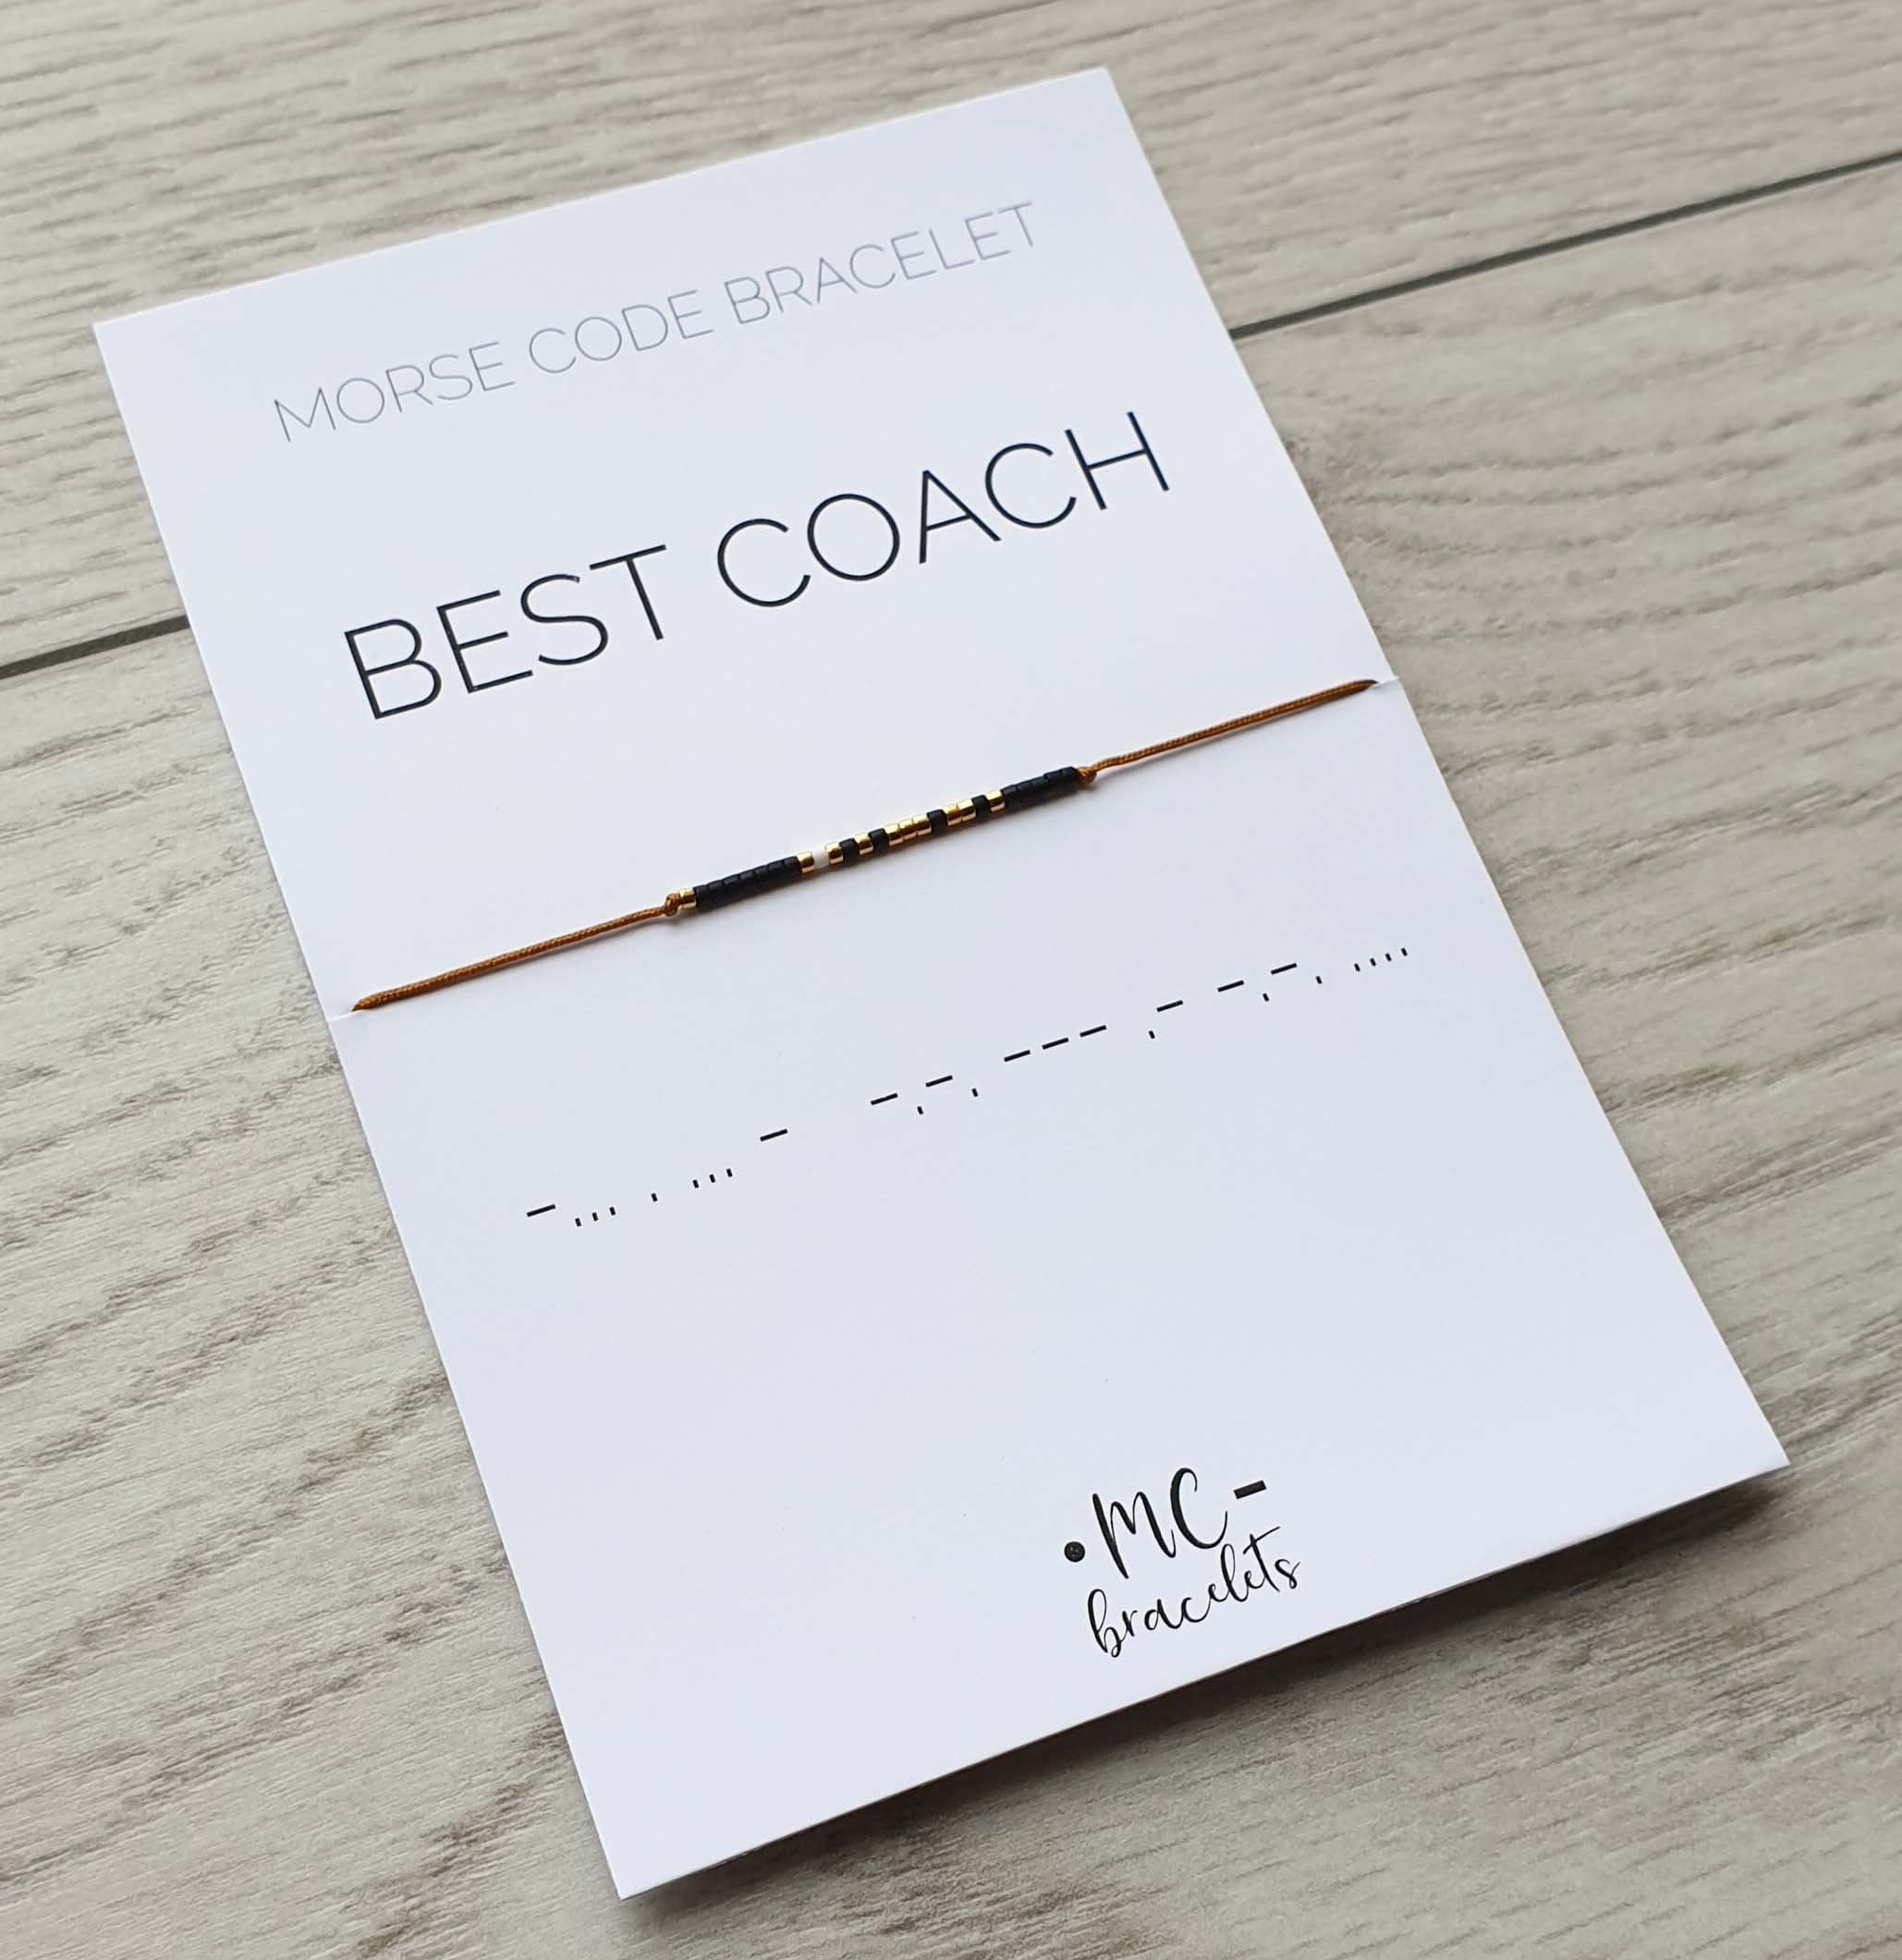 Best Coach Morse Code Bracelet Best Coach Jewelry Morse Code - Etsy